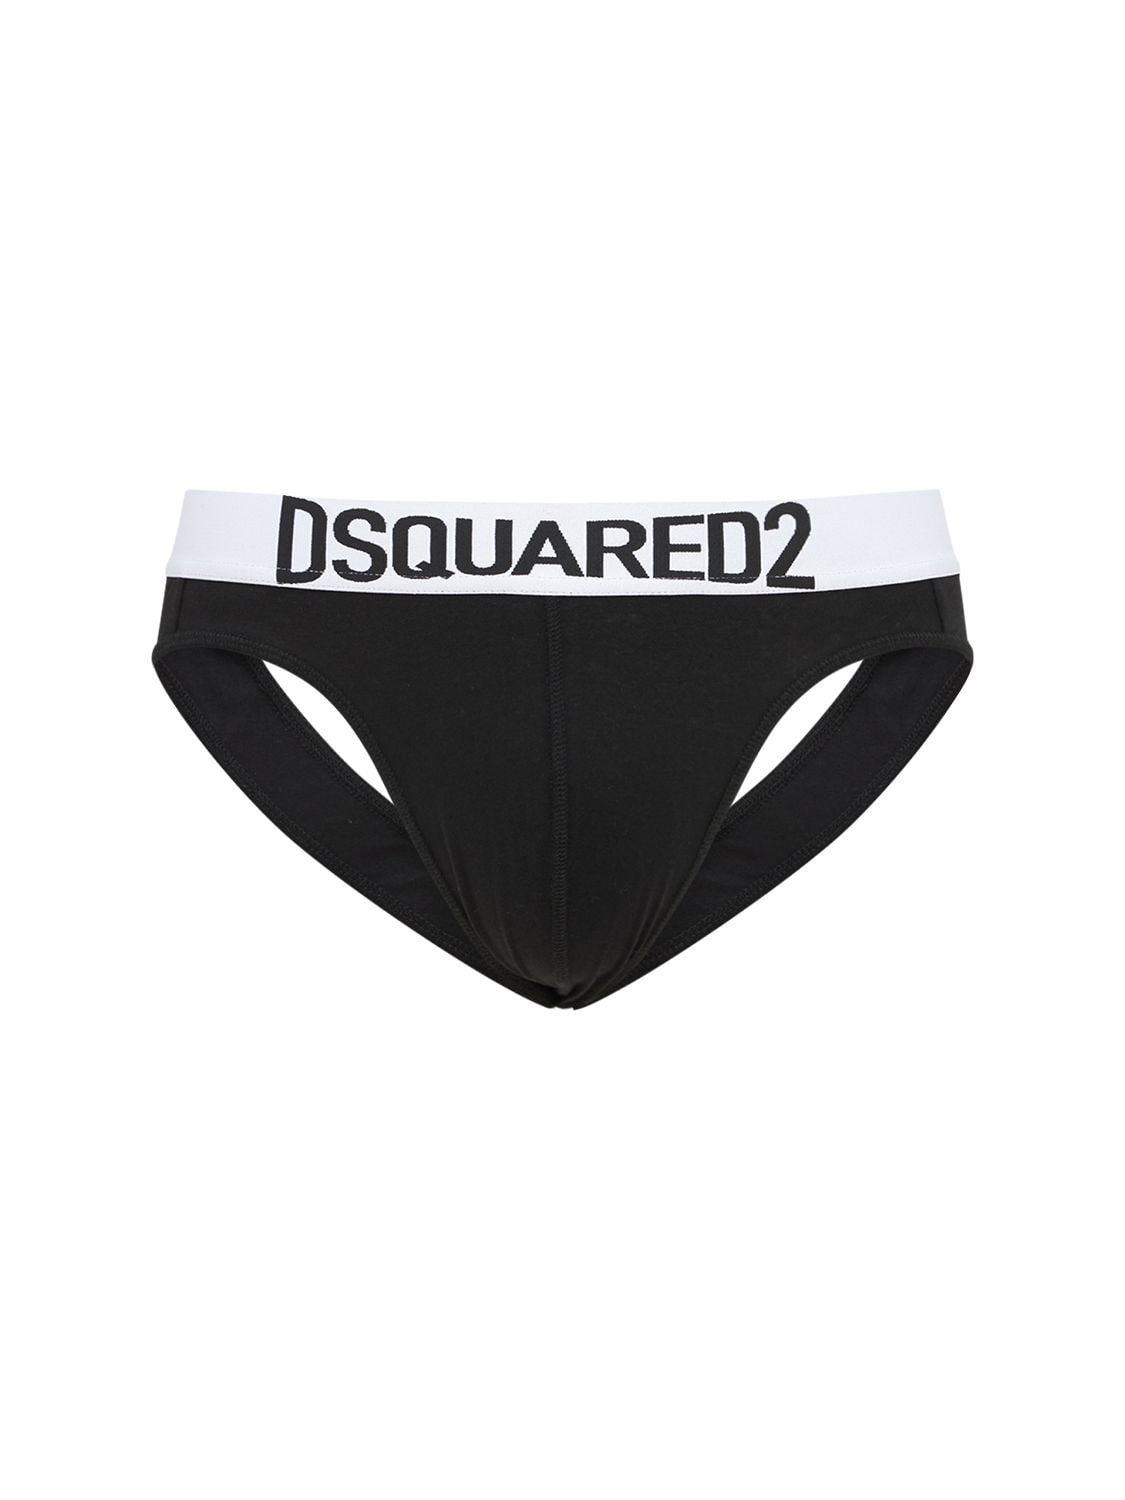 Dsquared2 Underwear Logo Cotton Jockstrap Briefs In Black | ModeSens